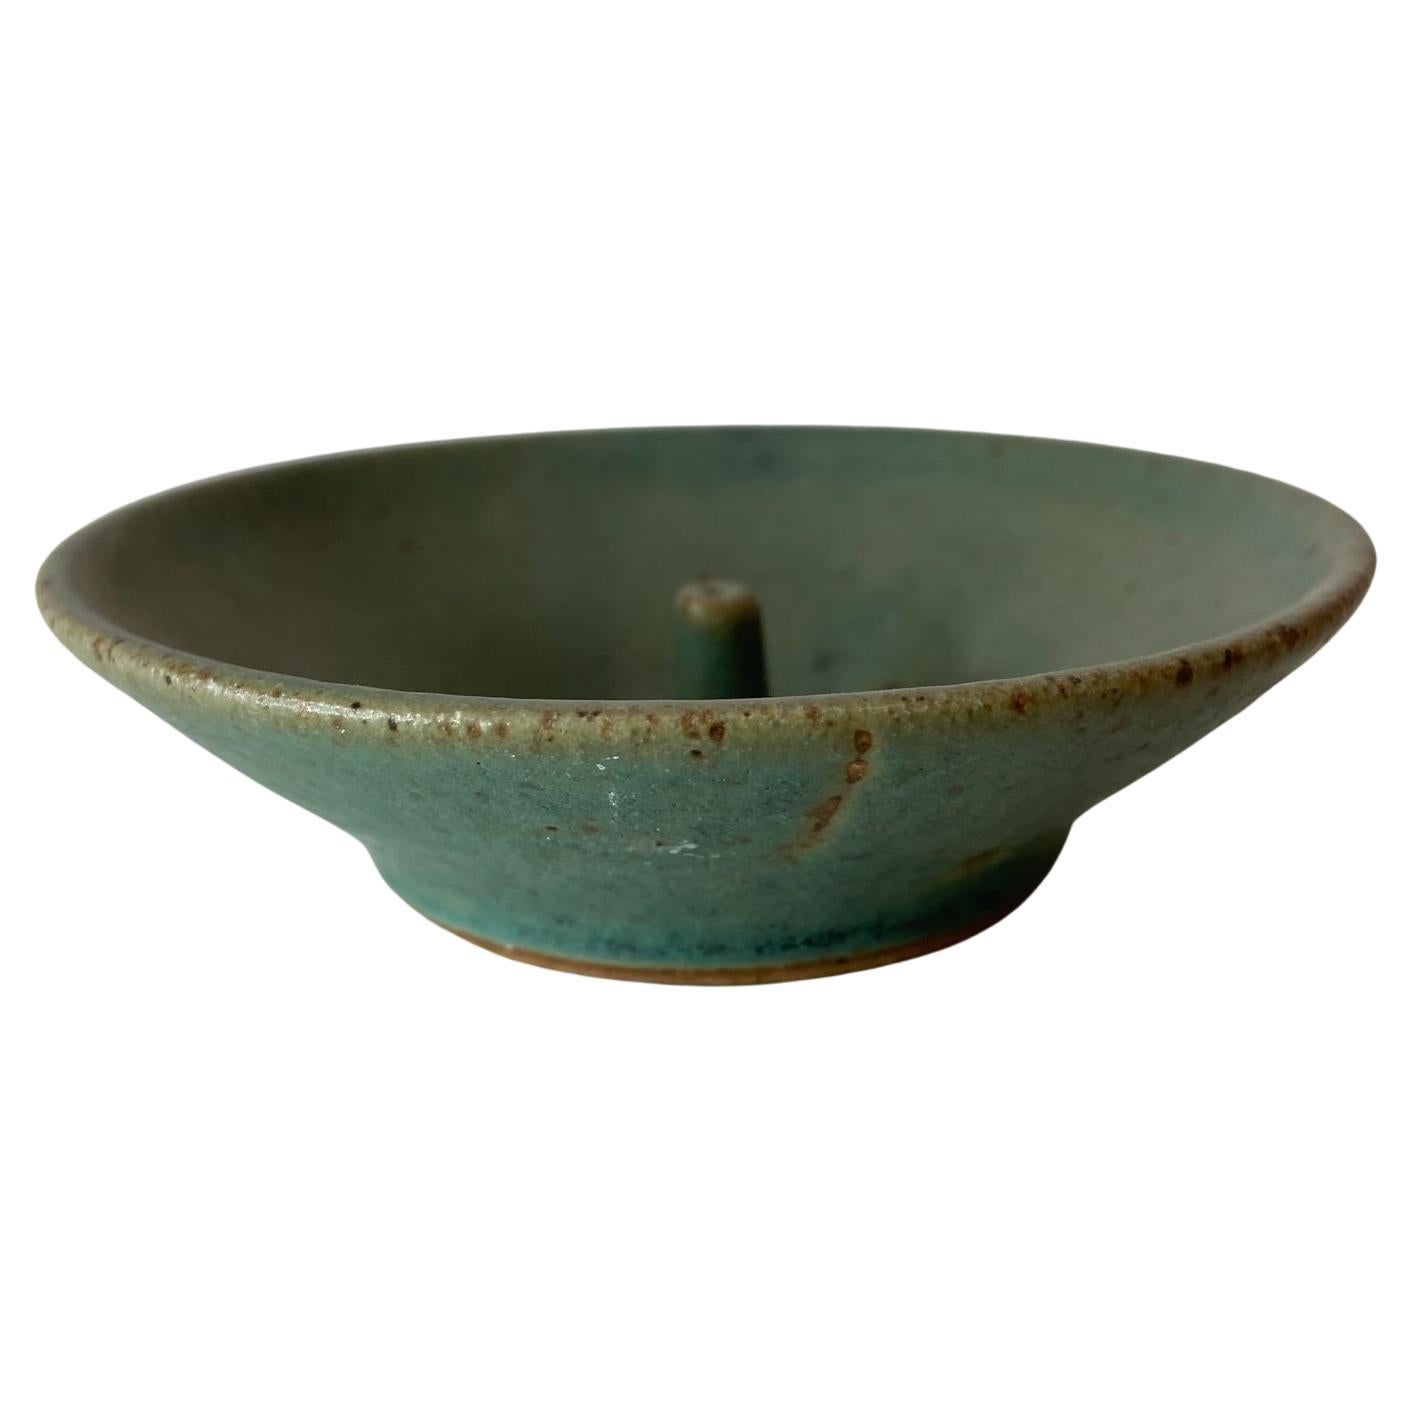 Sculptural Stoneware Art Pottery Bowl in Fusion Green Glaze 1970s California